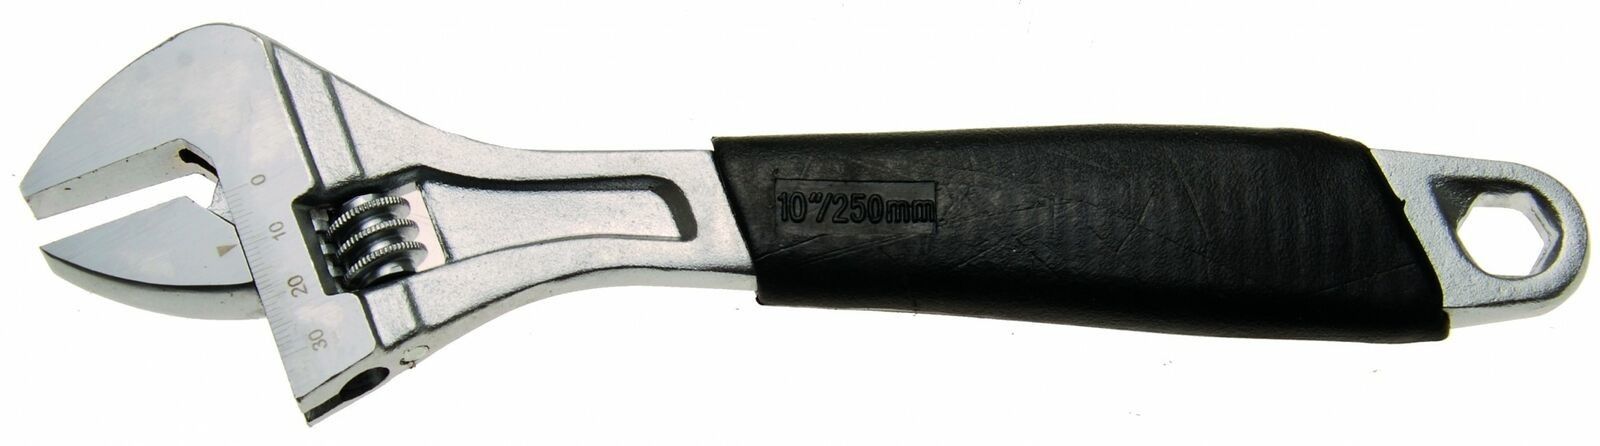 Chiave a rullino apertura 0-31 mm lunghezza mm 250 impugnatura gomma 10' BGS 1442